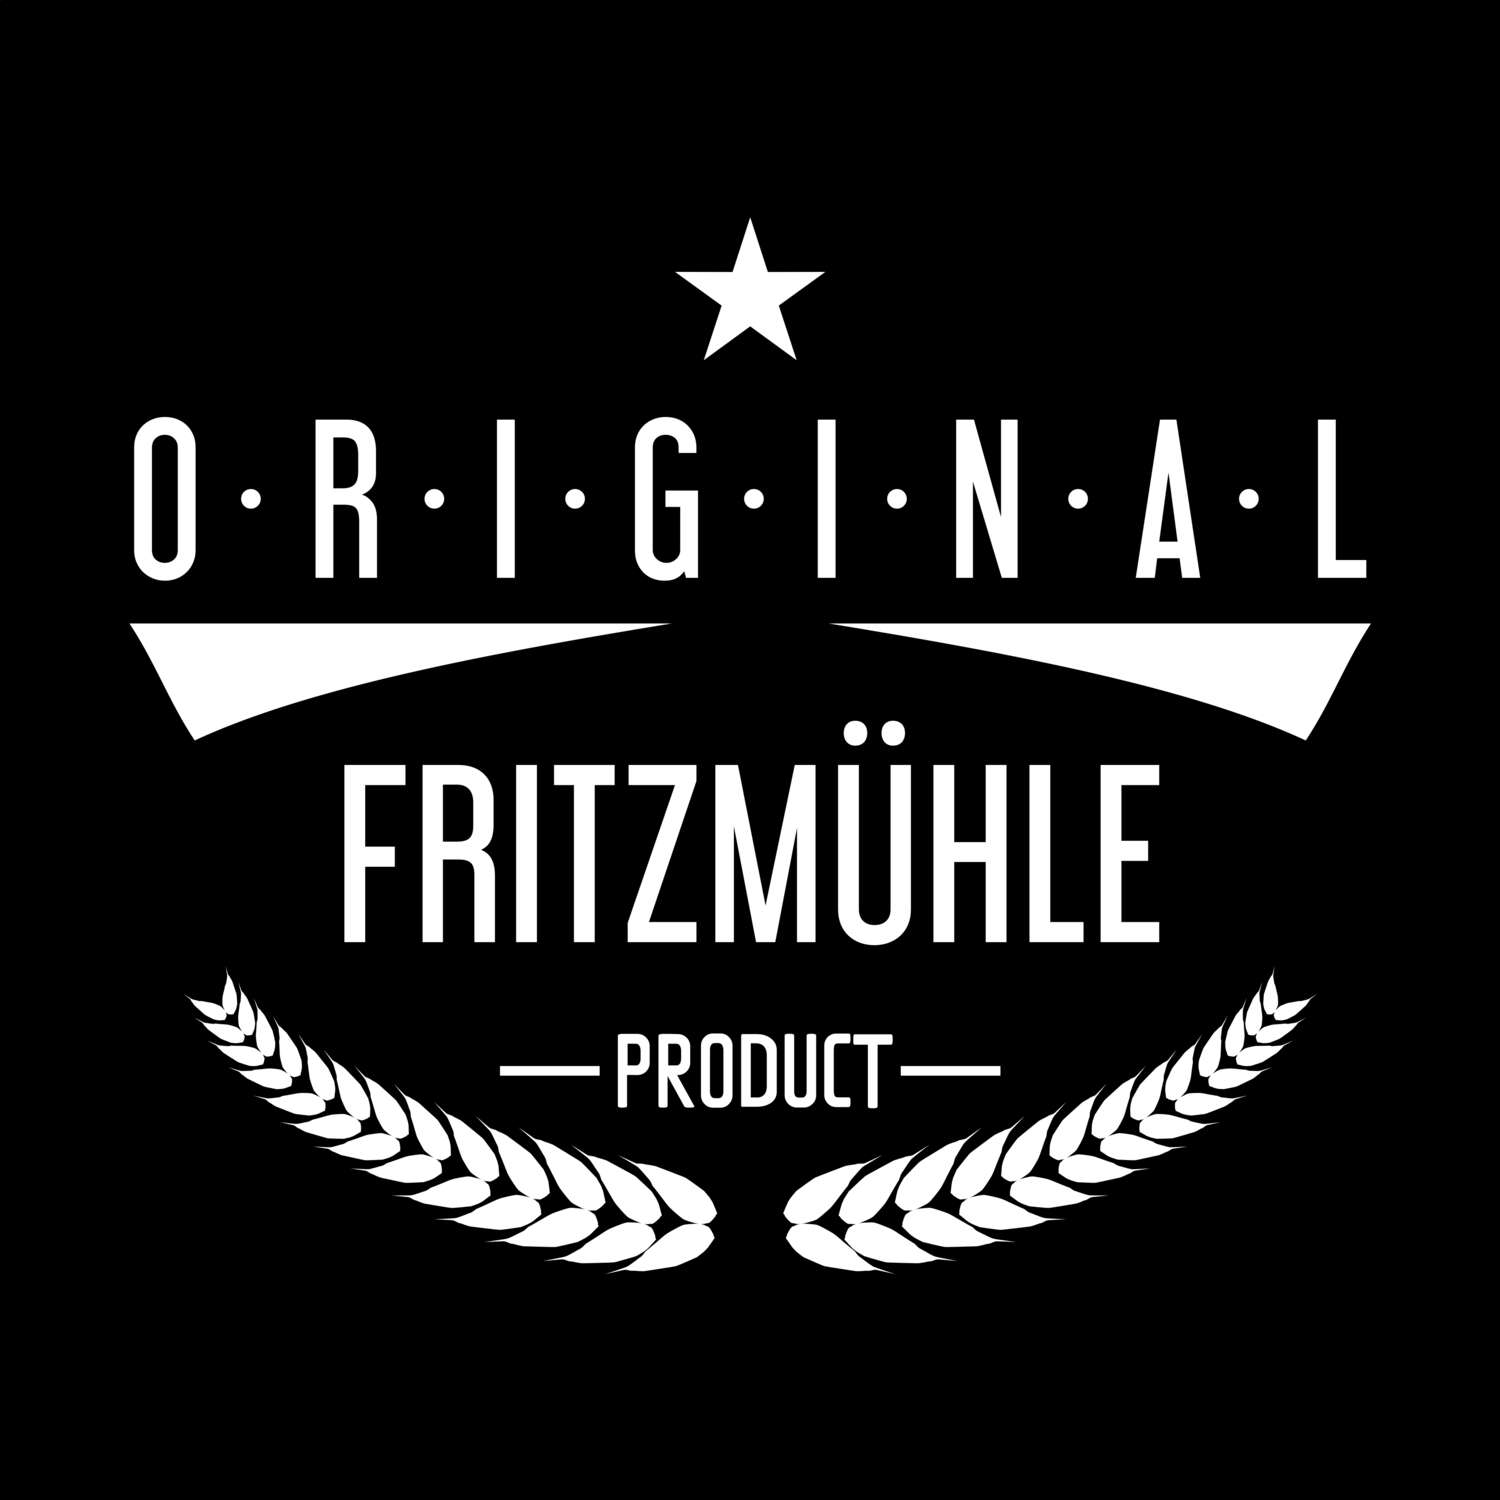 Fritzmühle T-Shirt »Original Product«